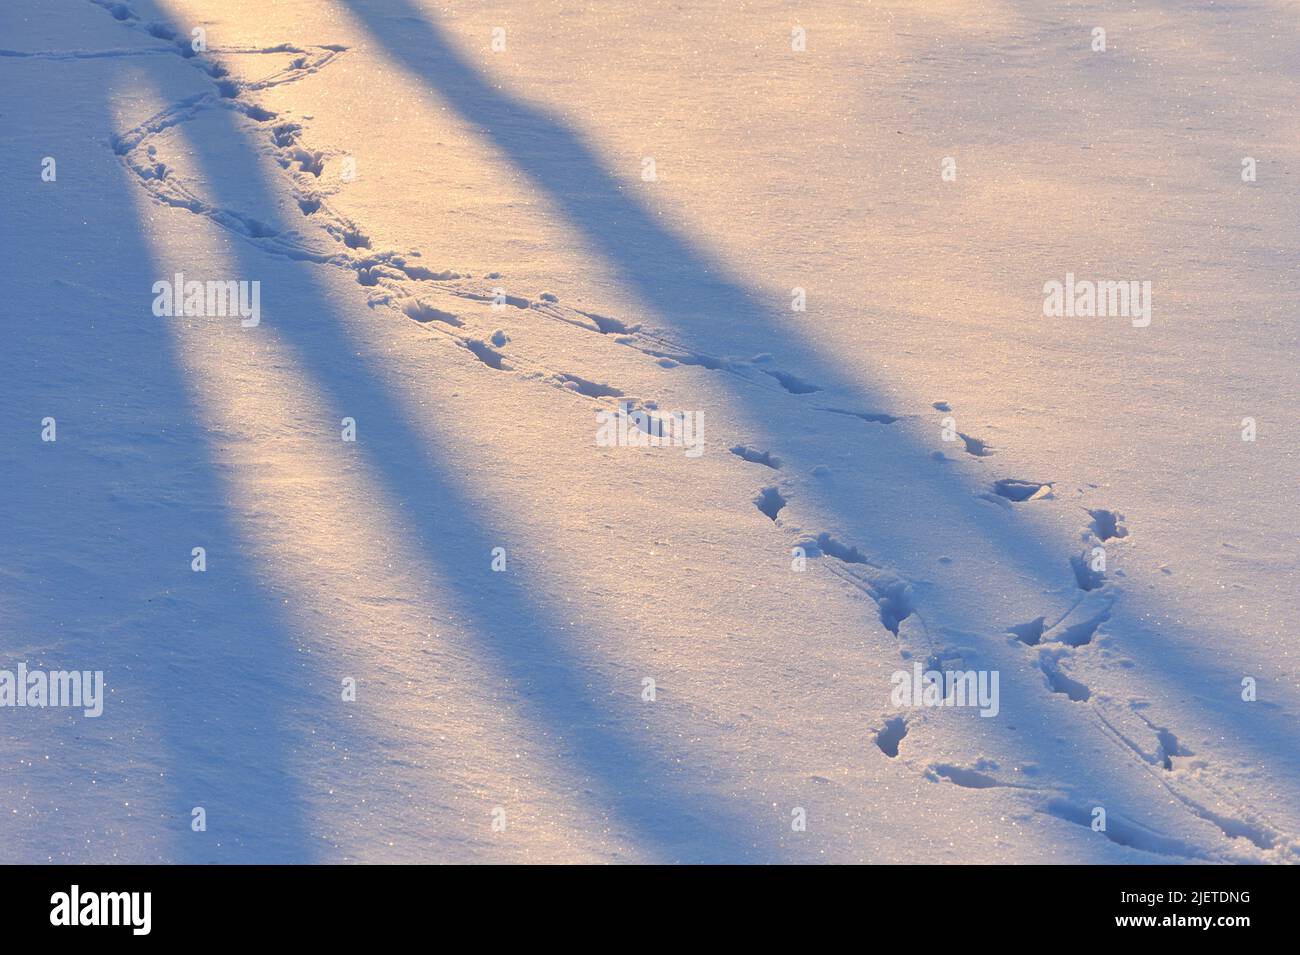 Bird tracks on snow Stock Photo